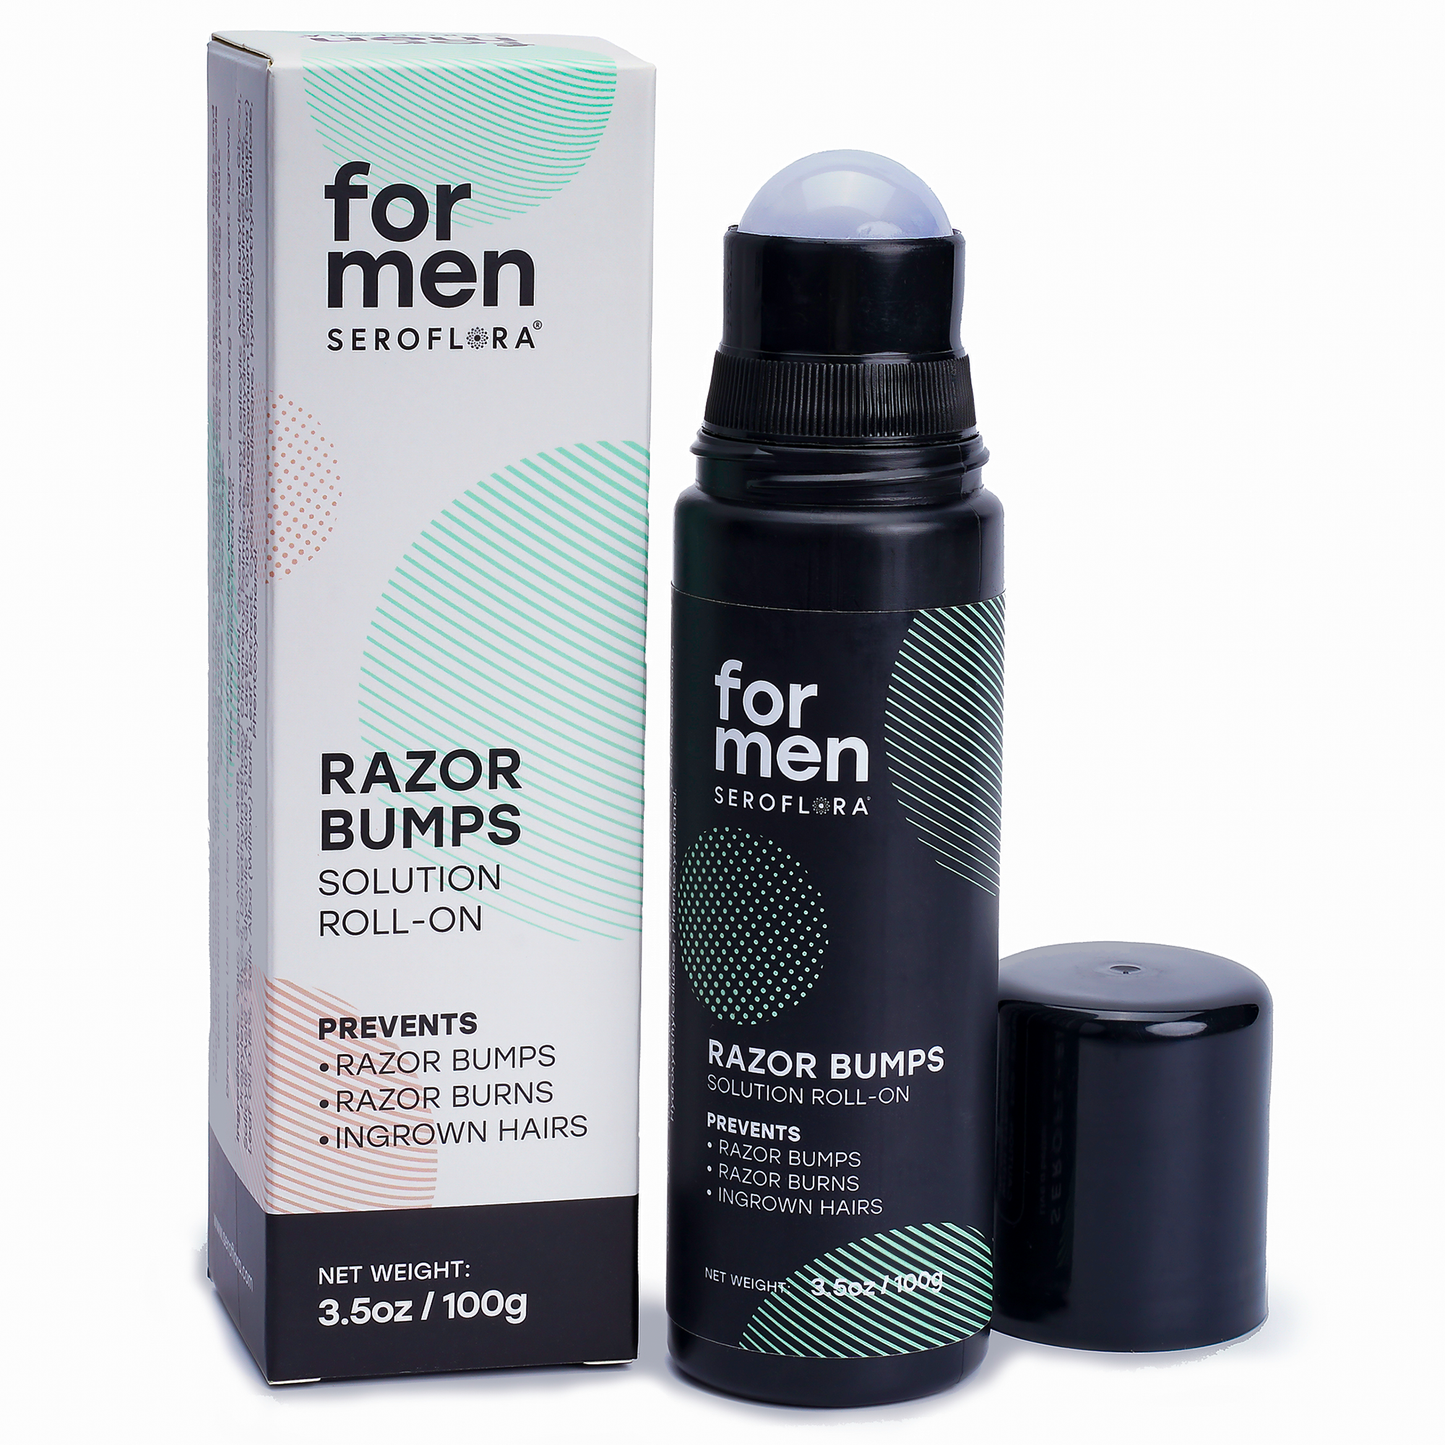 For Men Razor Bumps Solution